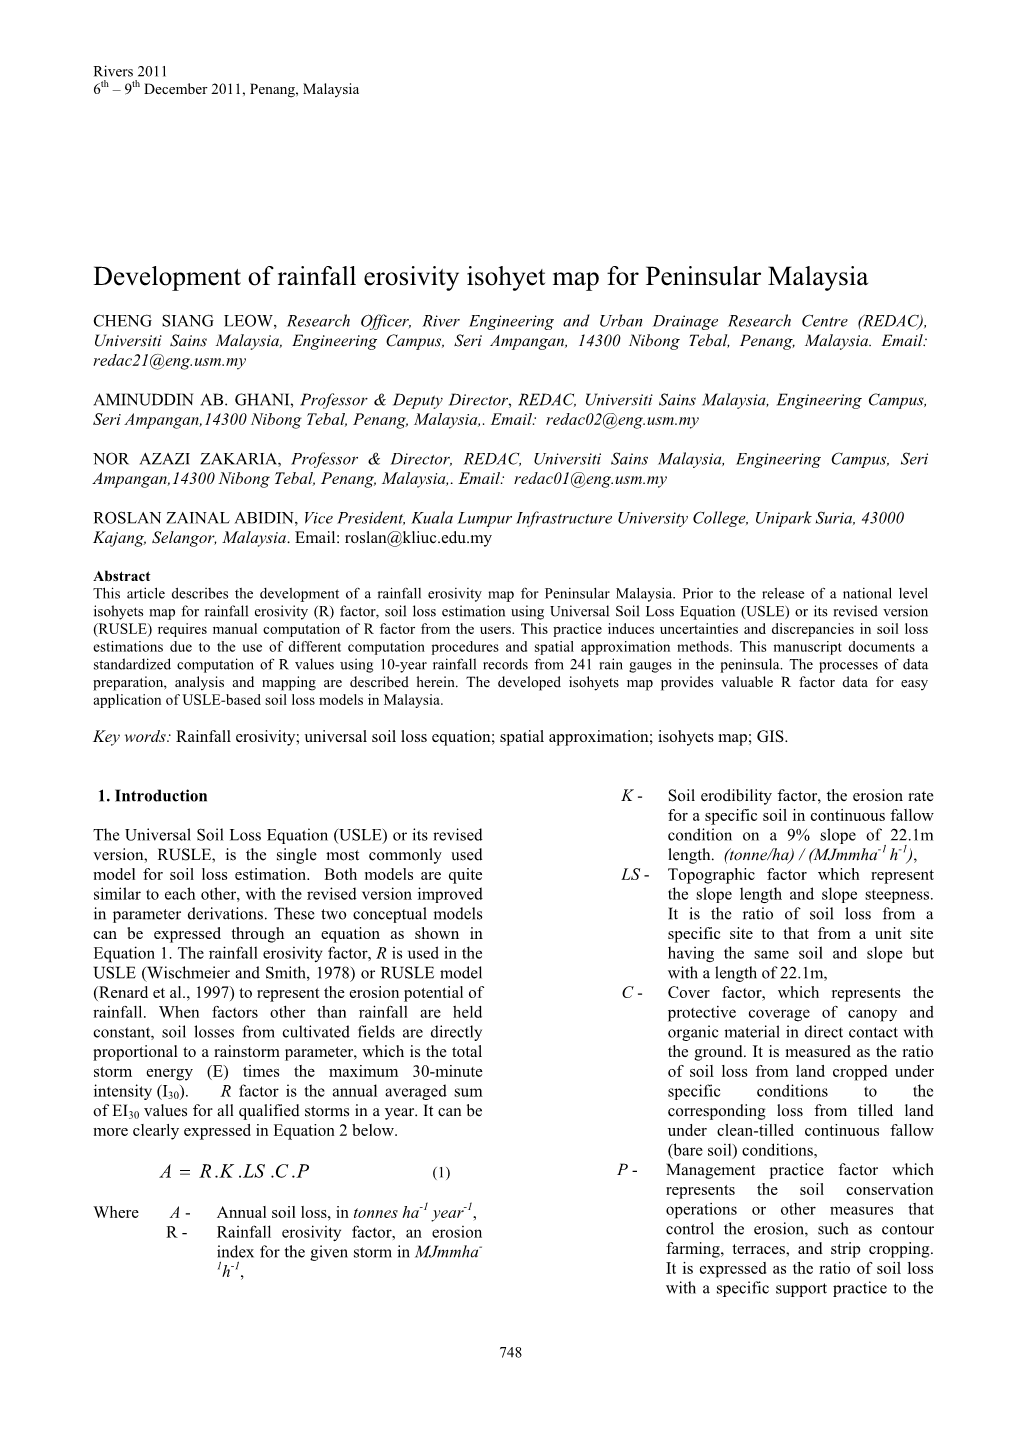 Development of Rainfall Erosivity Isohyet Map for Peninsular Malaysia